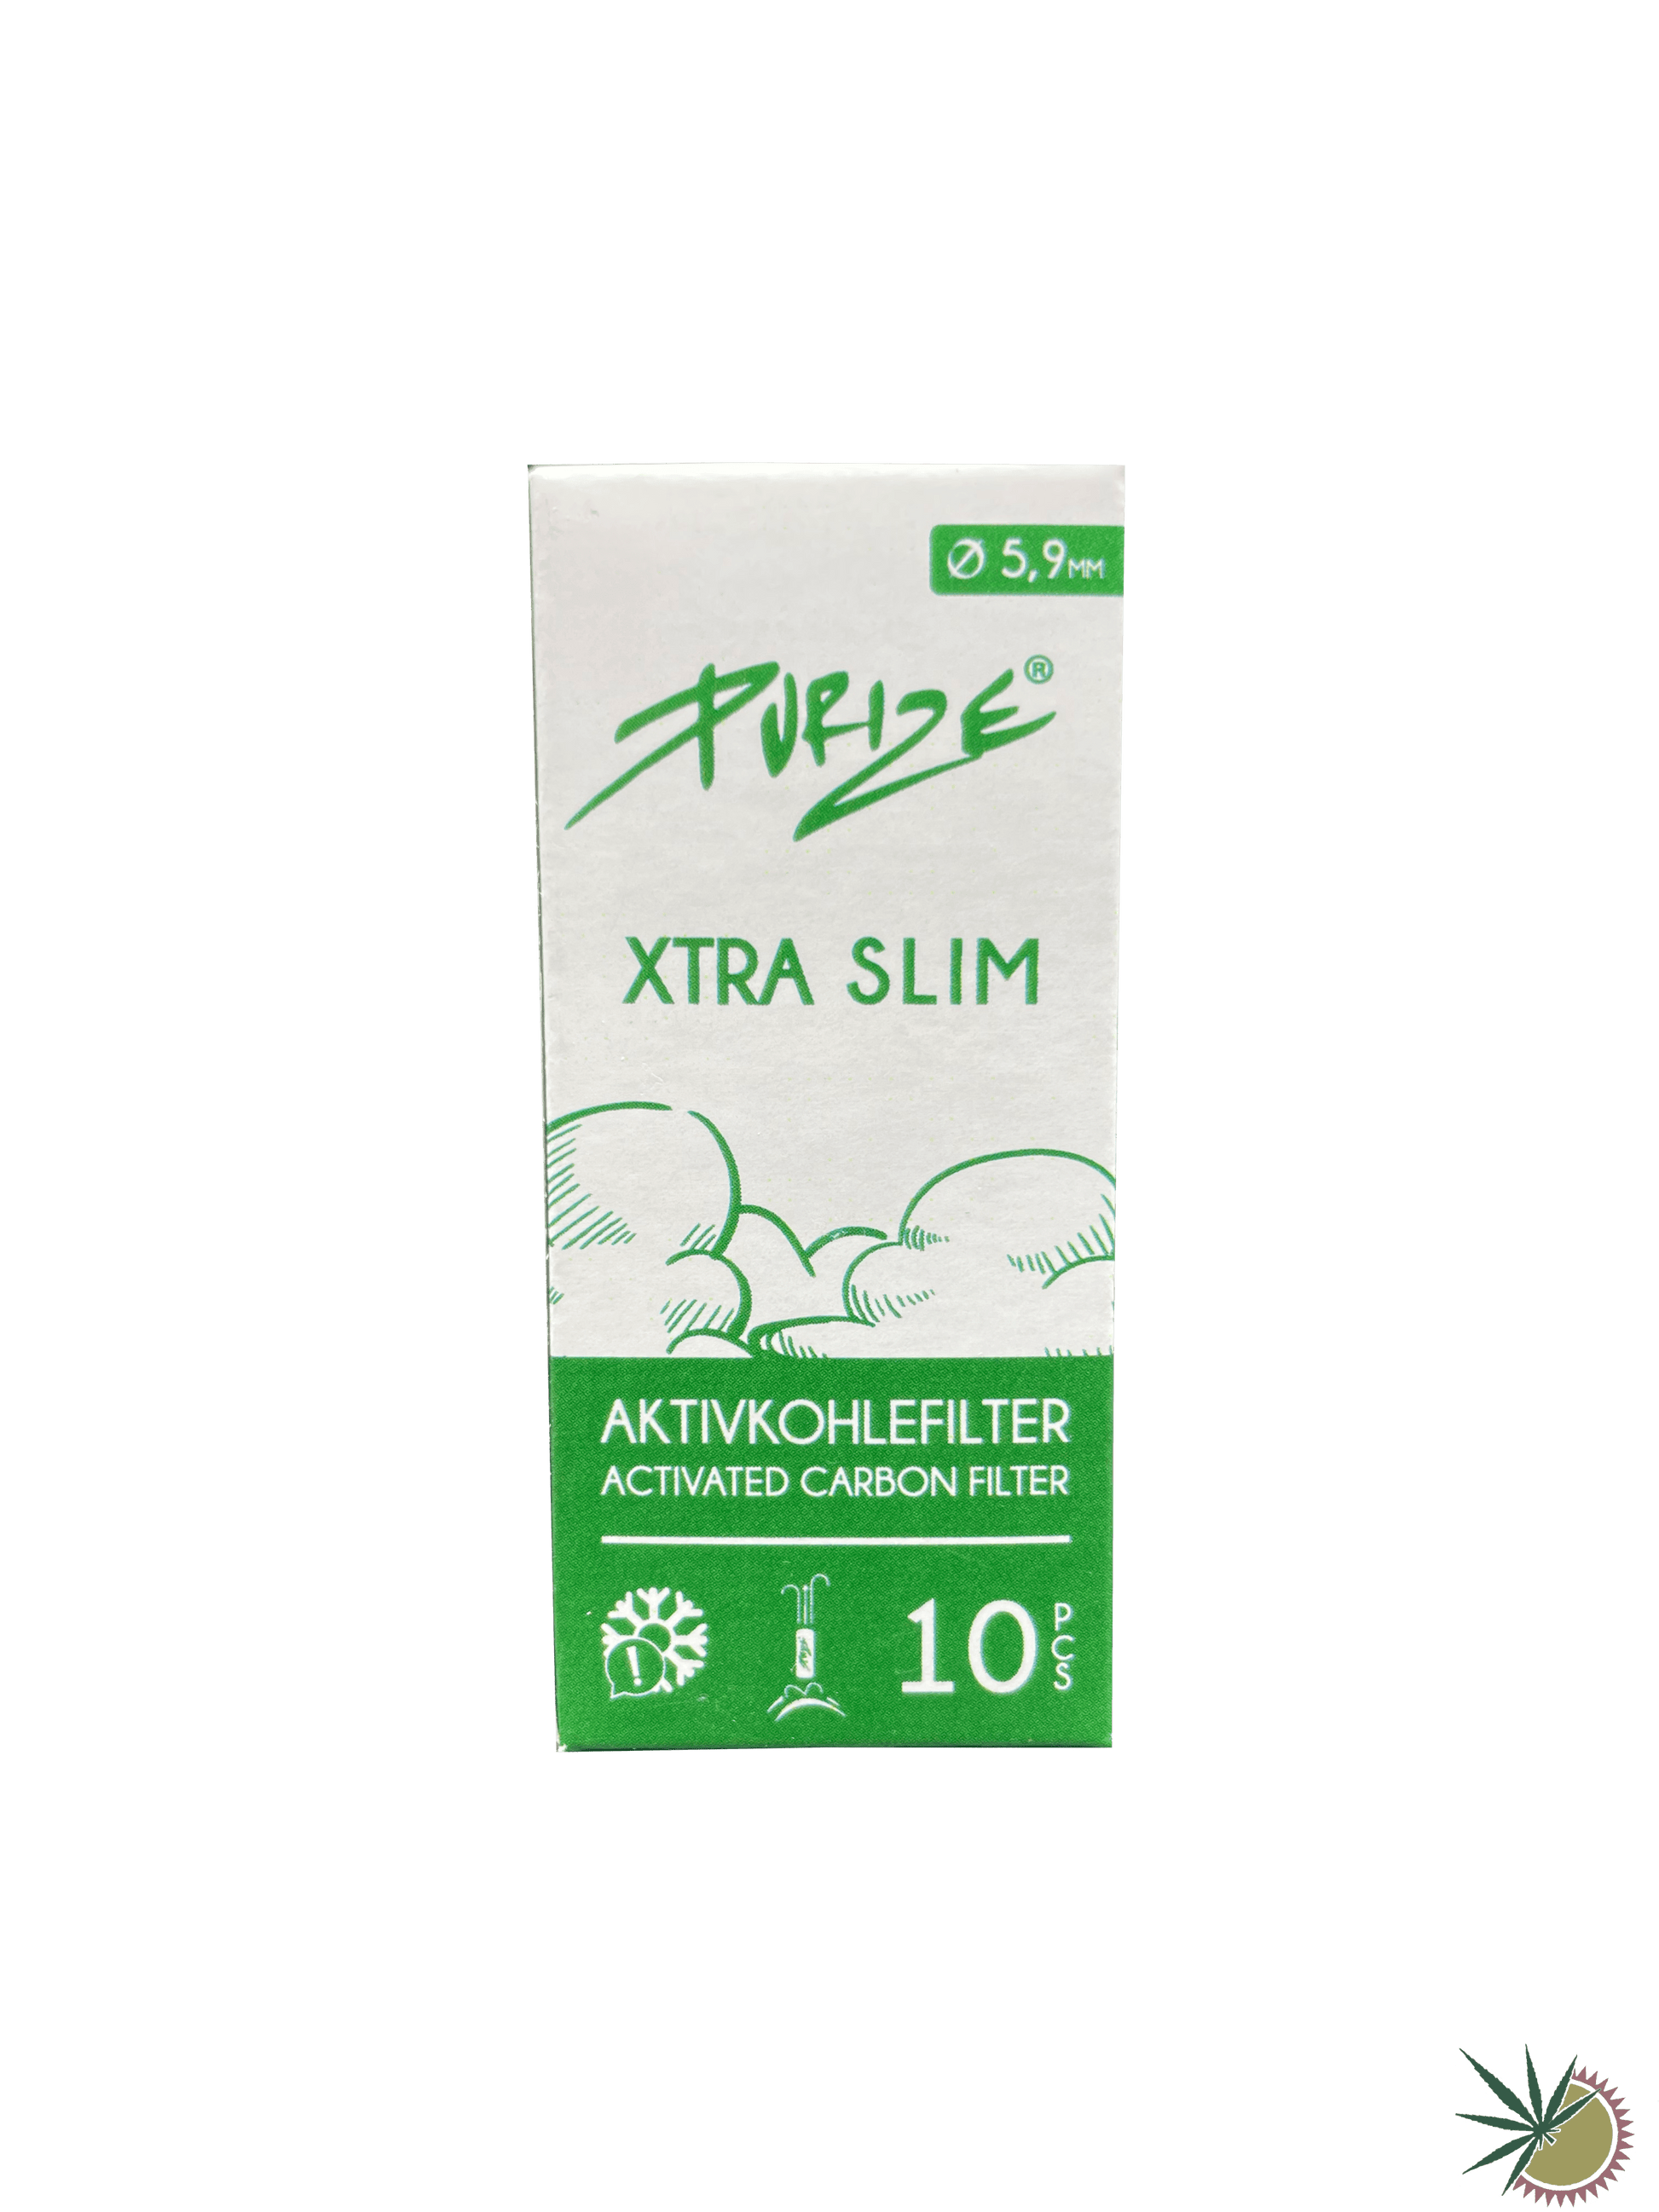 Purize Aktivkohlefilter Ø5.9mm Xtra Slim 1 Packung á 10 Stück - THC Headshop